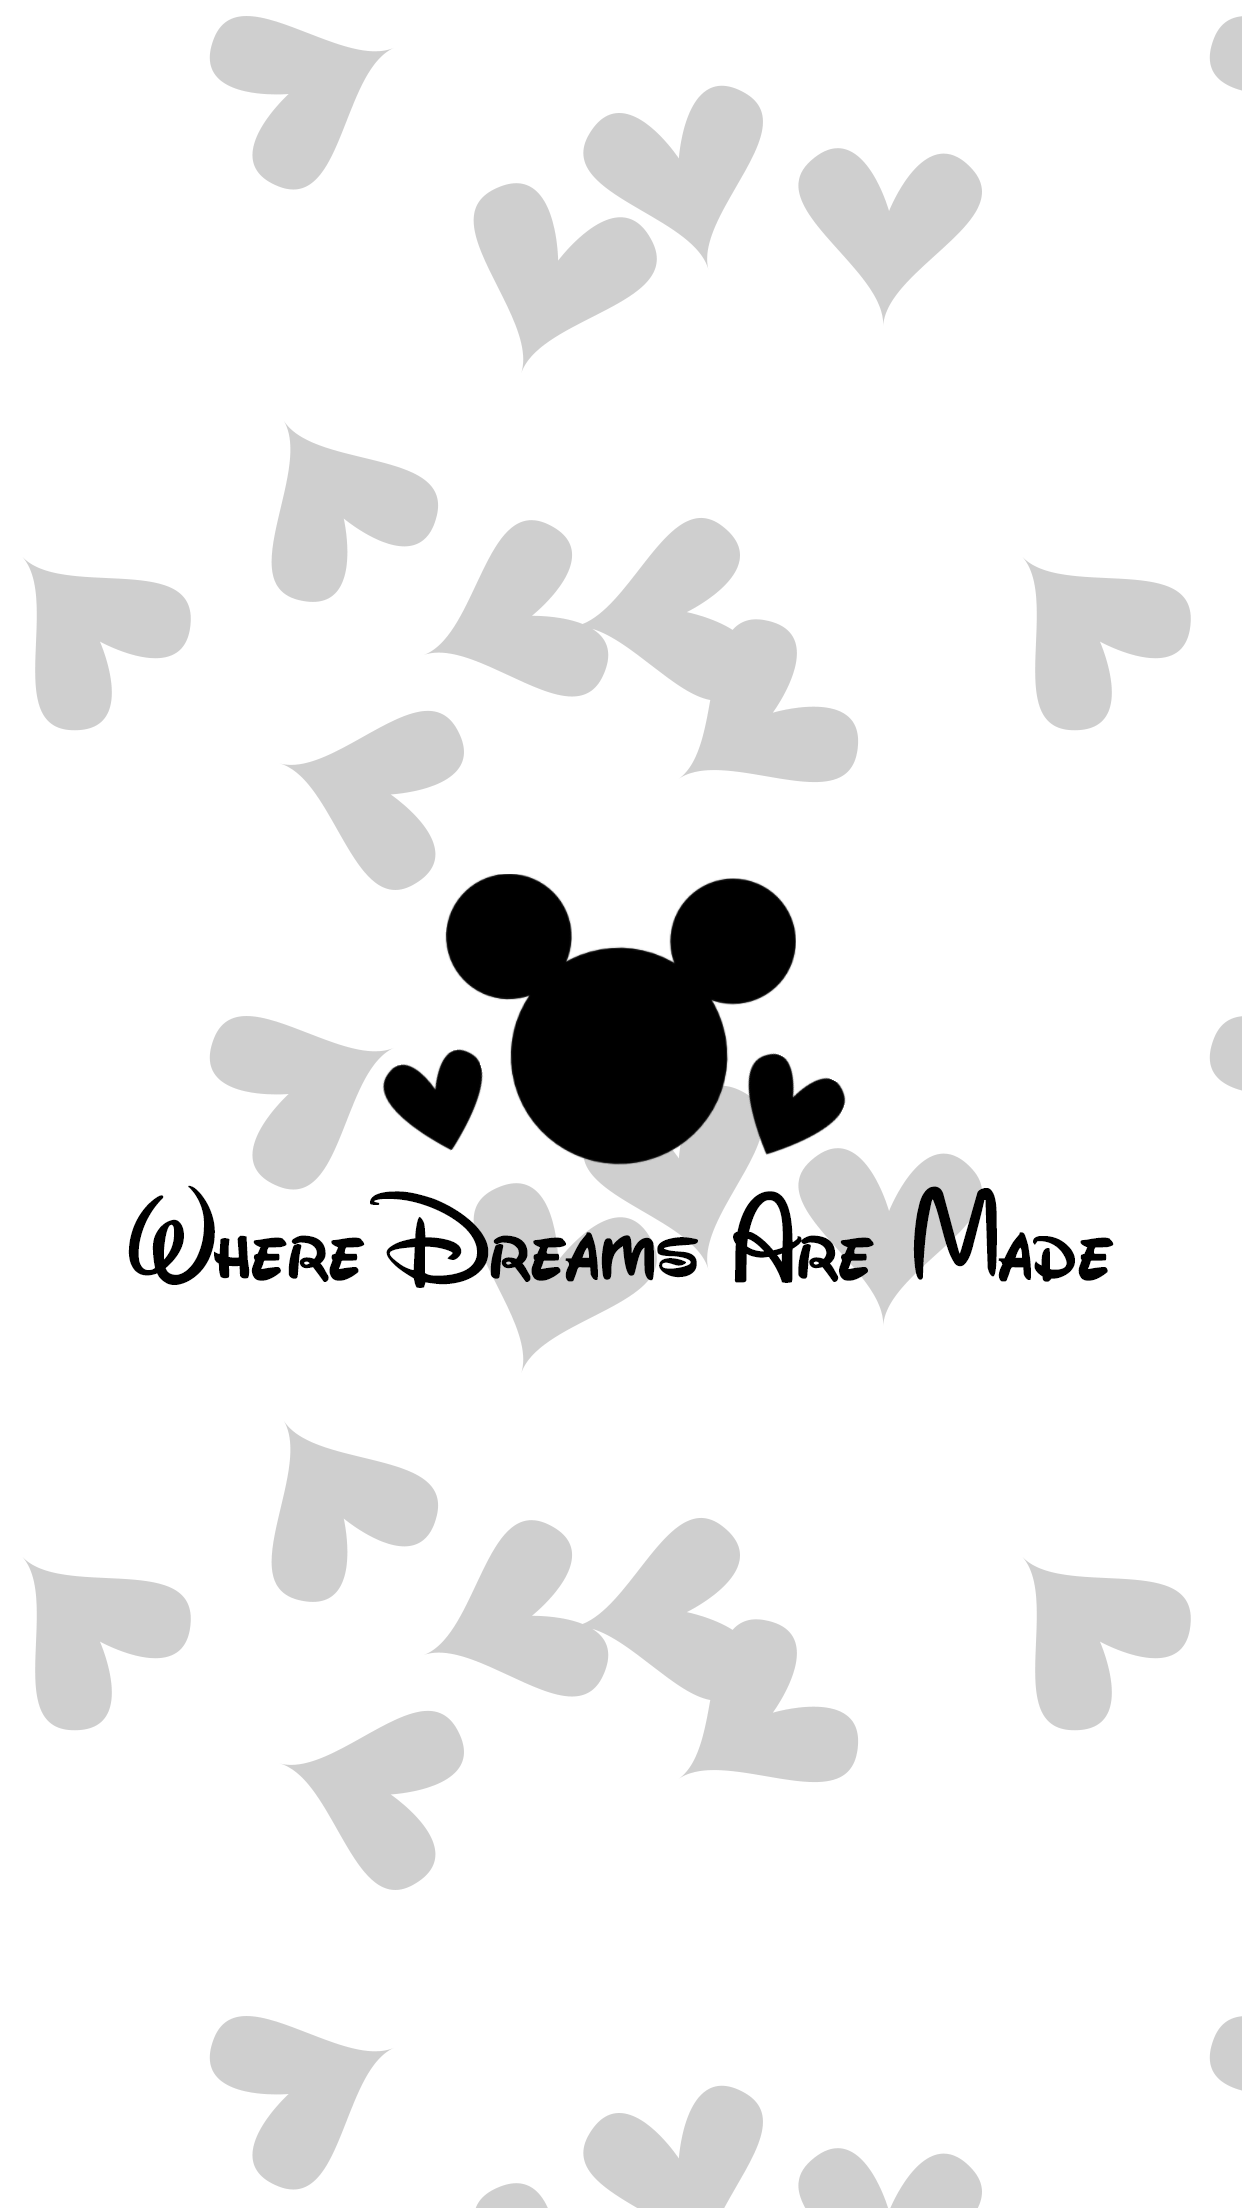 Black Minnie Mouse Wallpaper